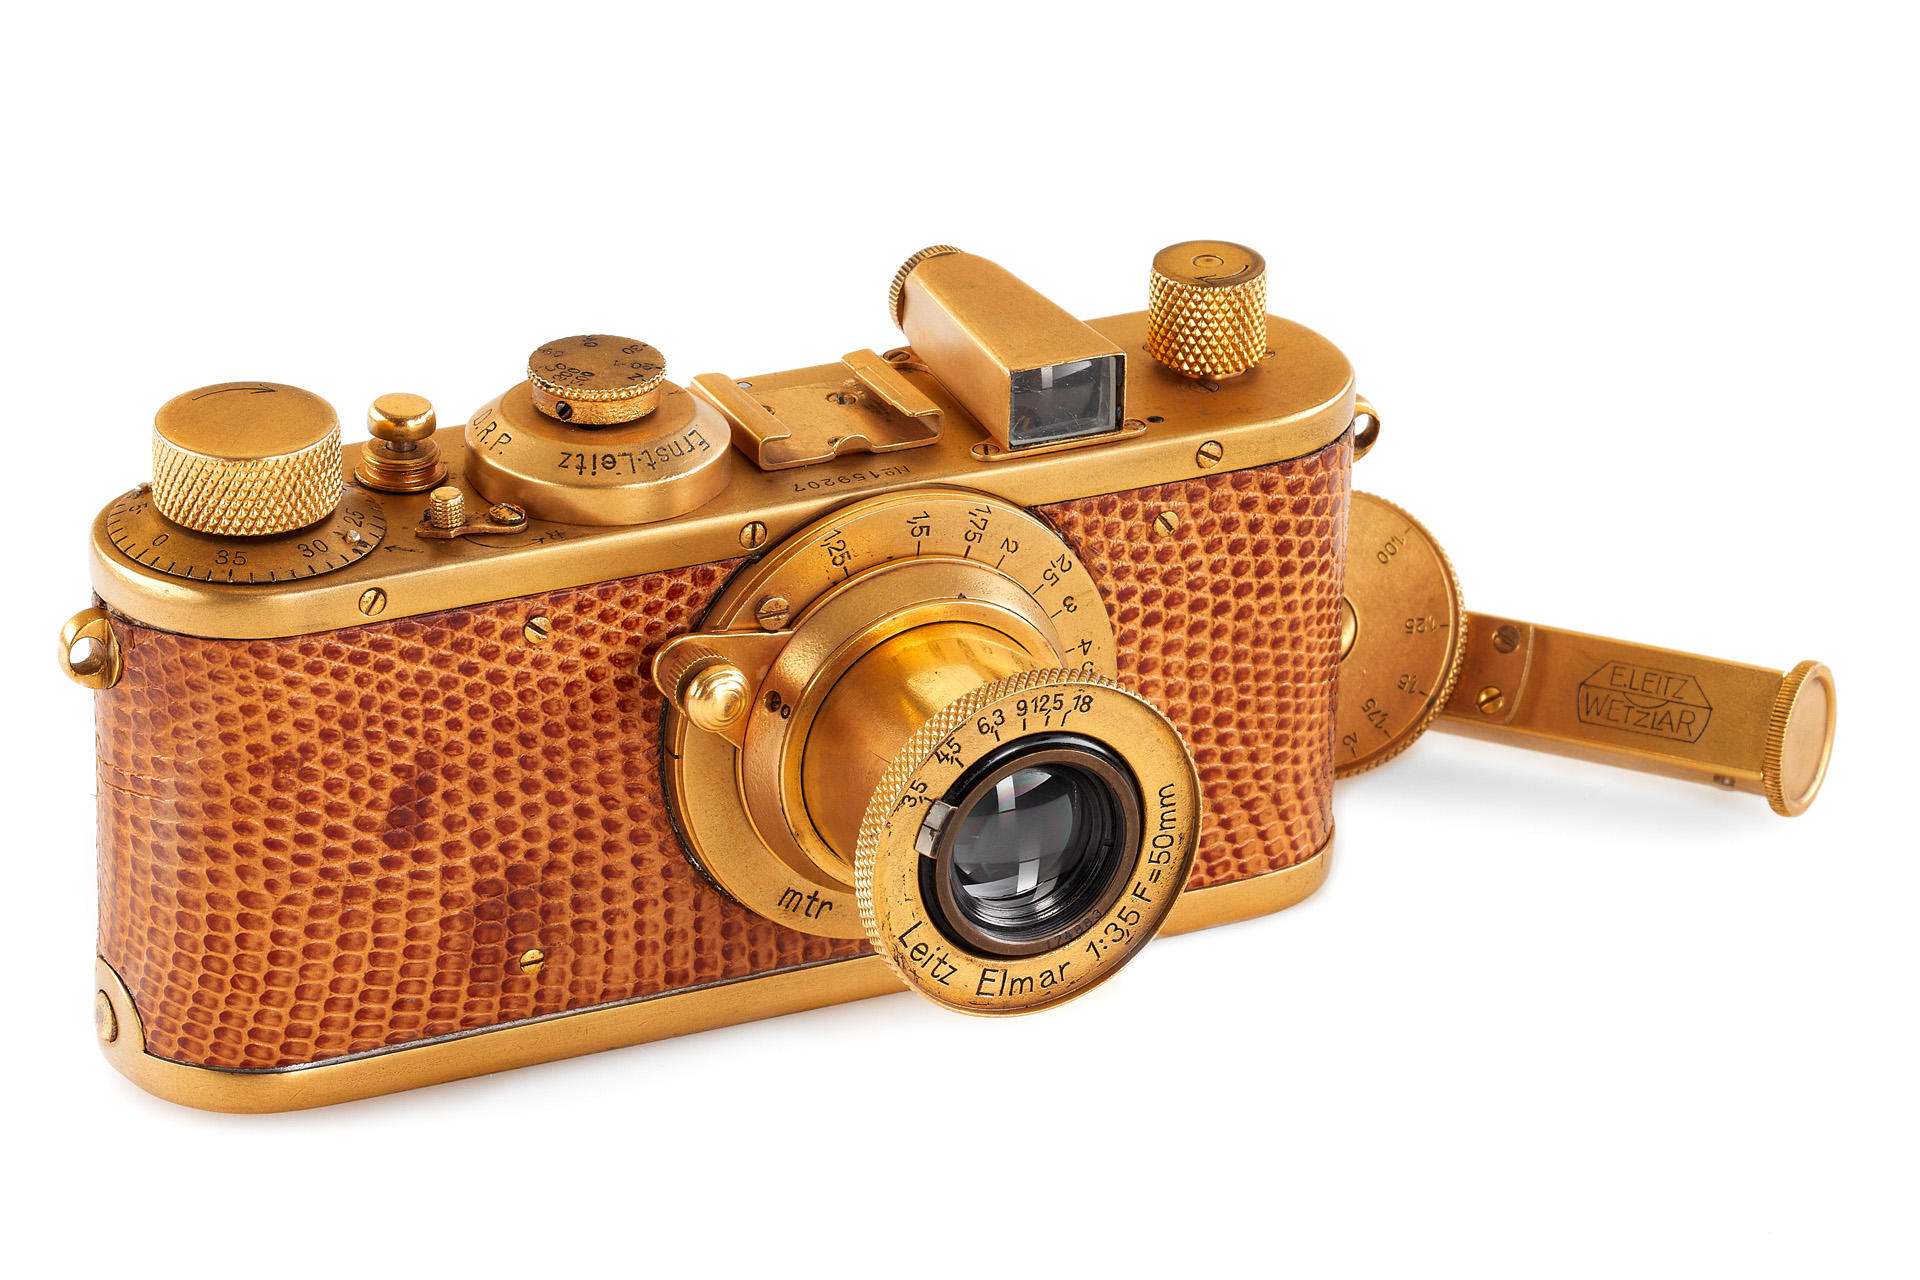 Leica Standard 'Luxus' replica